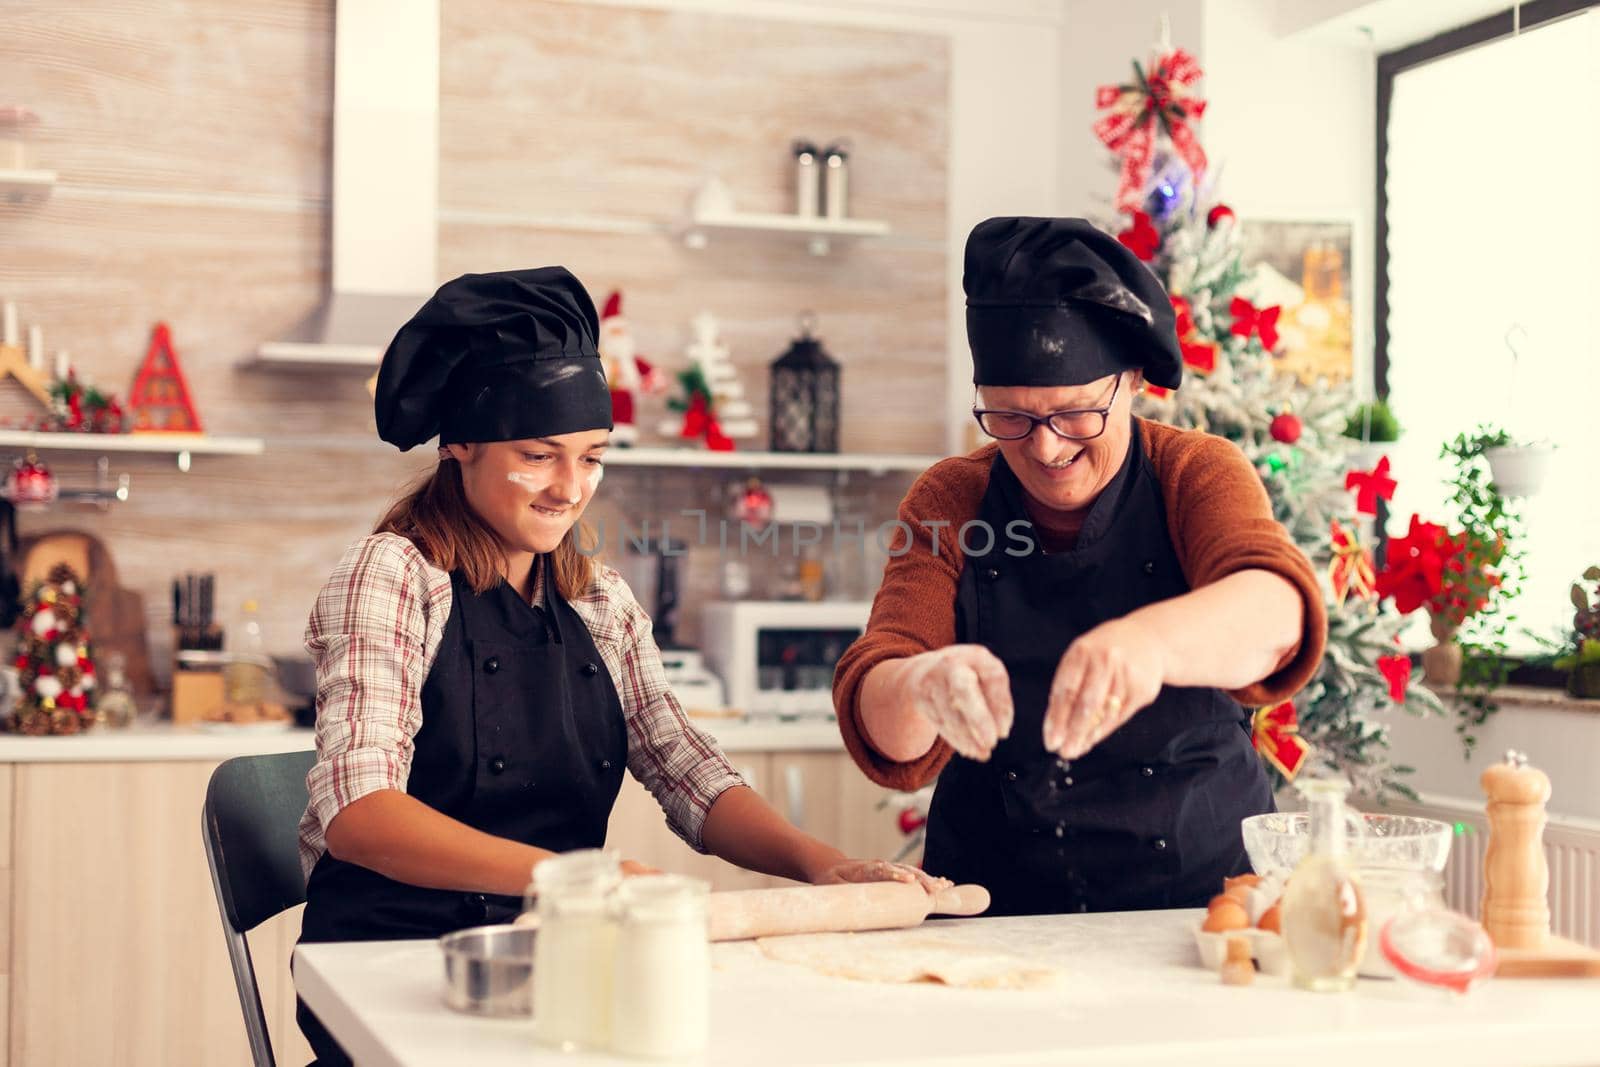 Grandmother in apron during christmas day baking making desert with child. Happy cheerful joyfull teenage girl helping senior woman preparing sweet cookies to celebrate winter holidays.